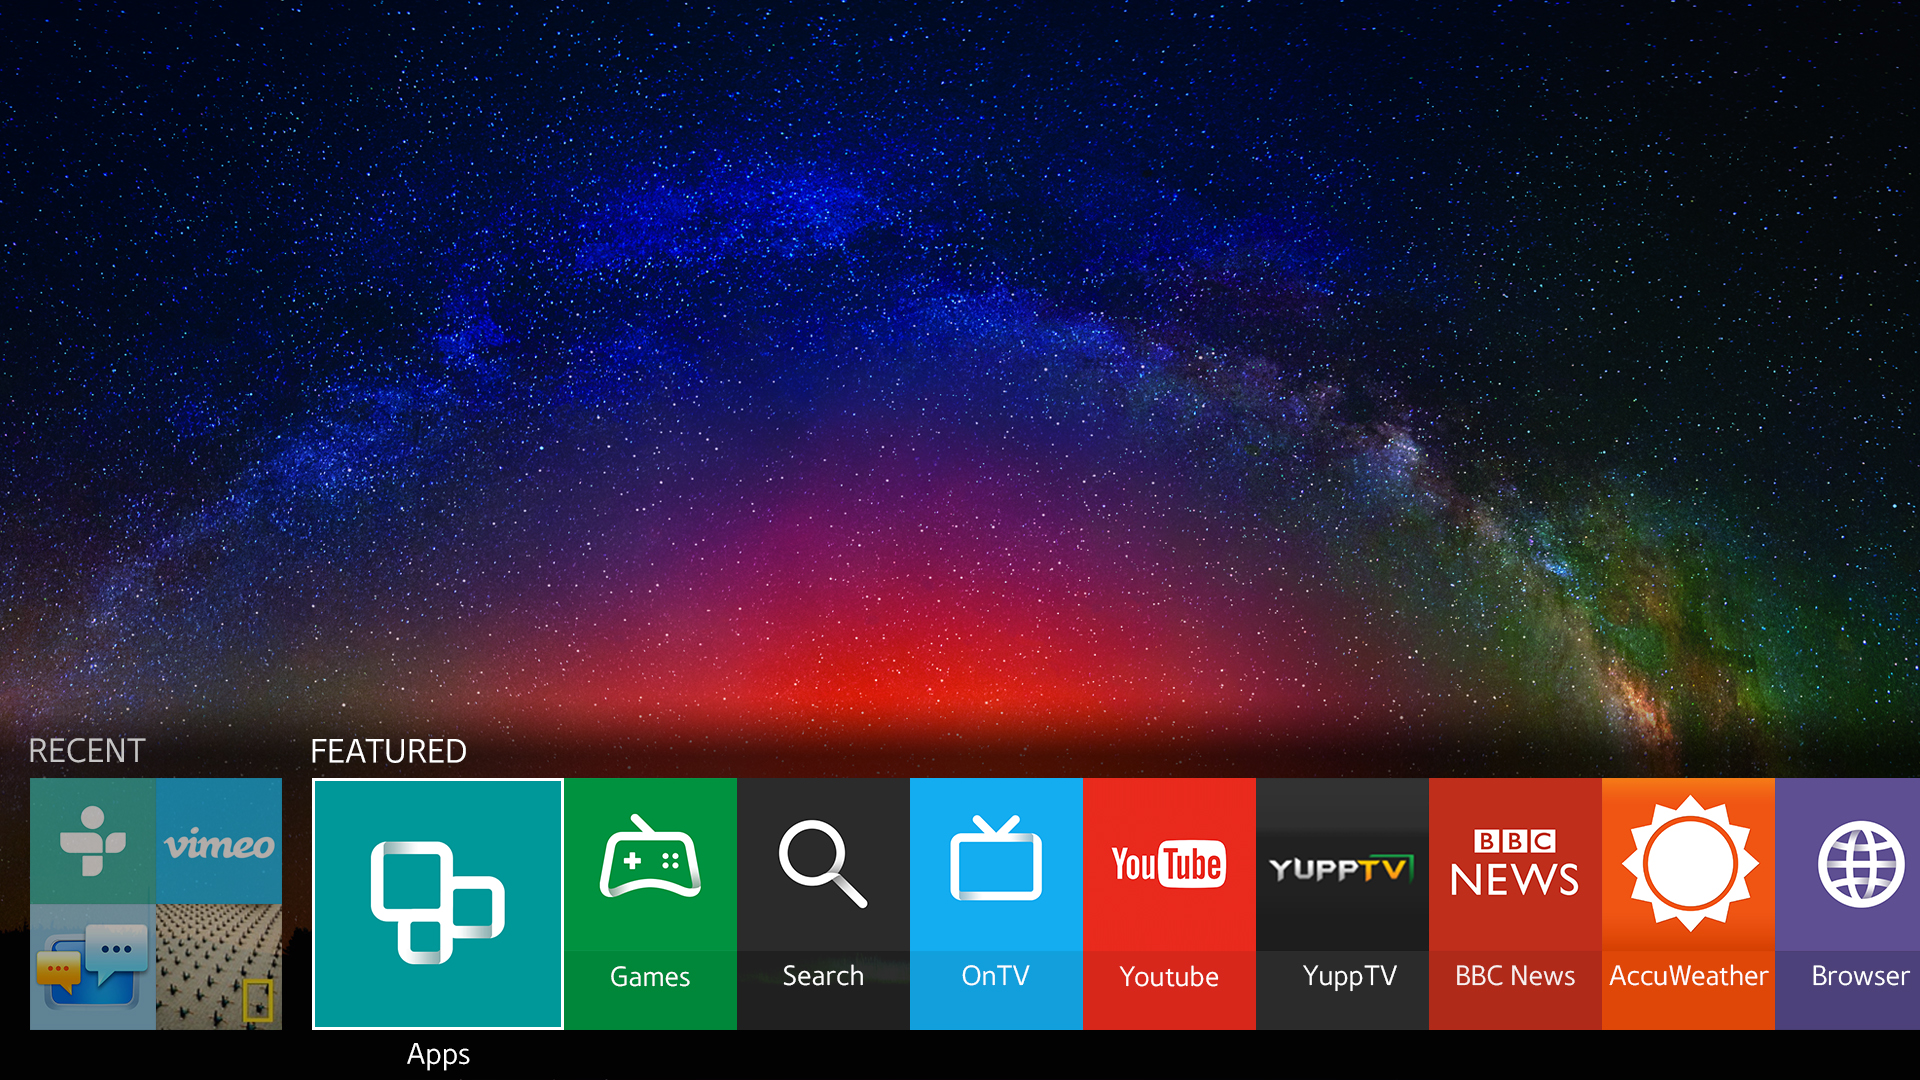 Samsung Tv Windows 10